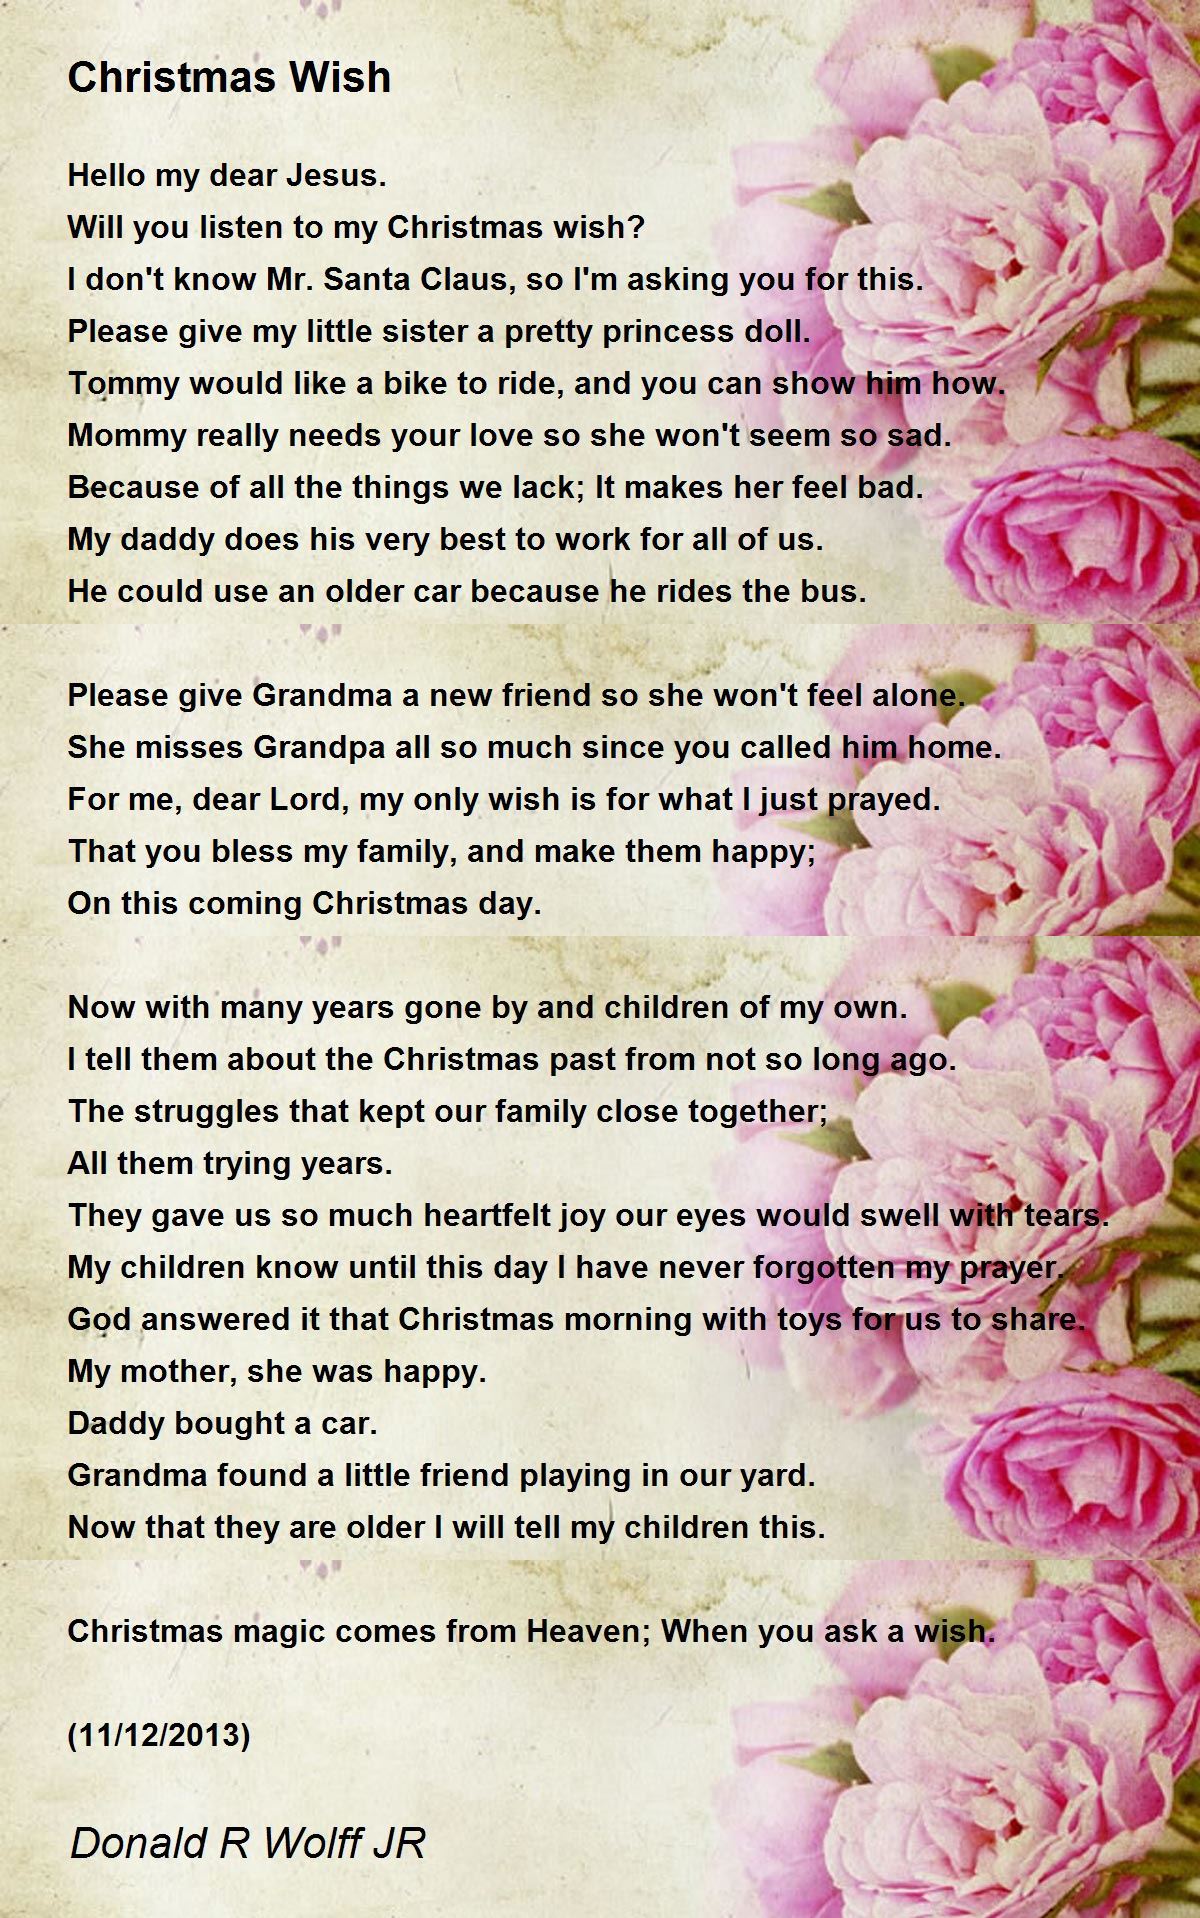 Christmas Wish Poem by Donald R Wolff JR - Poem Hunter